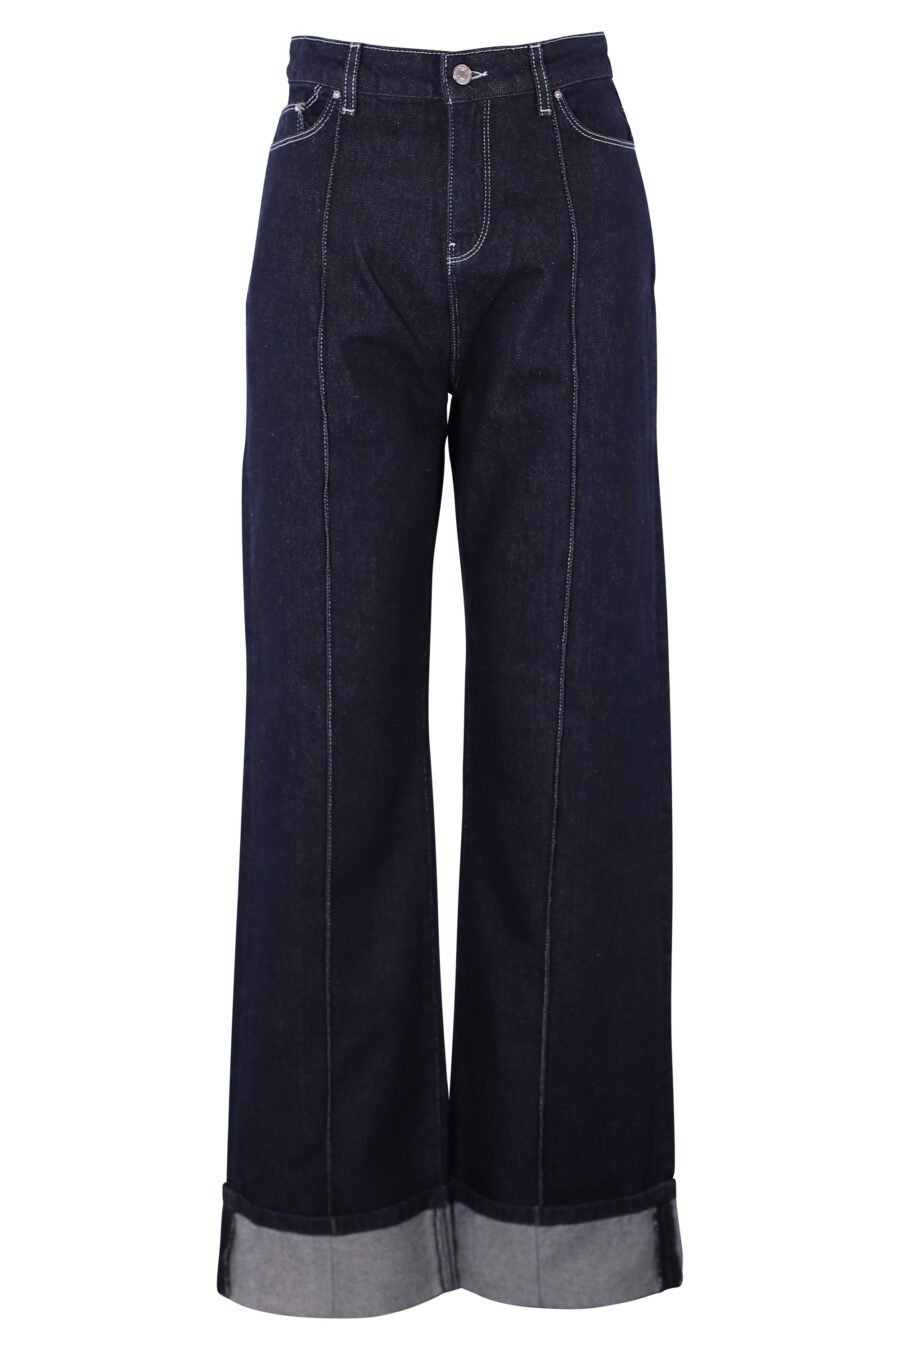 Dark blue flared jeans - IMG 6301